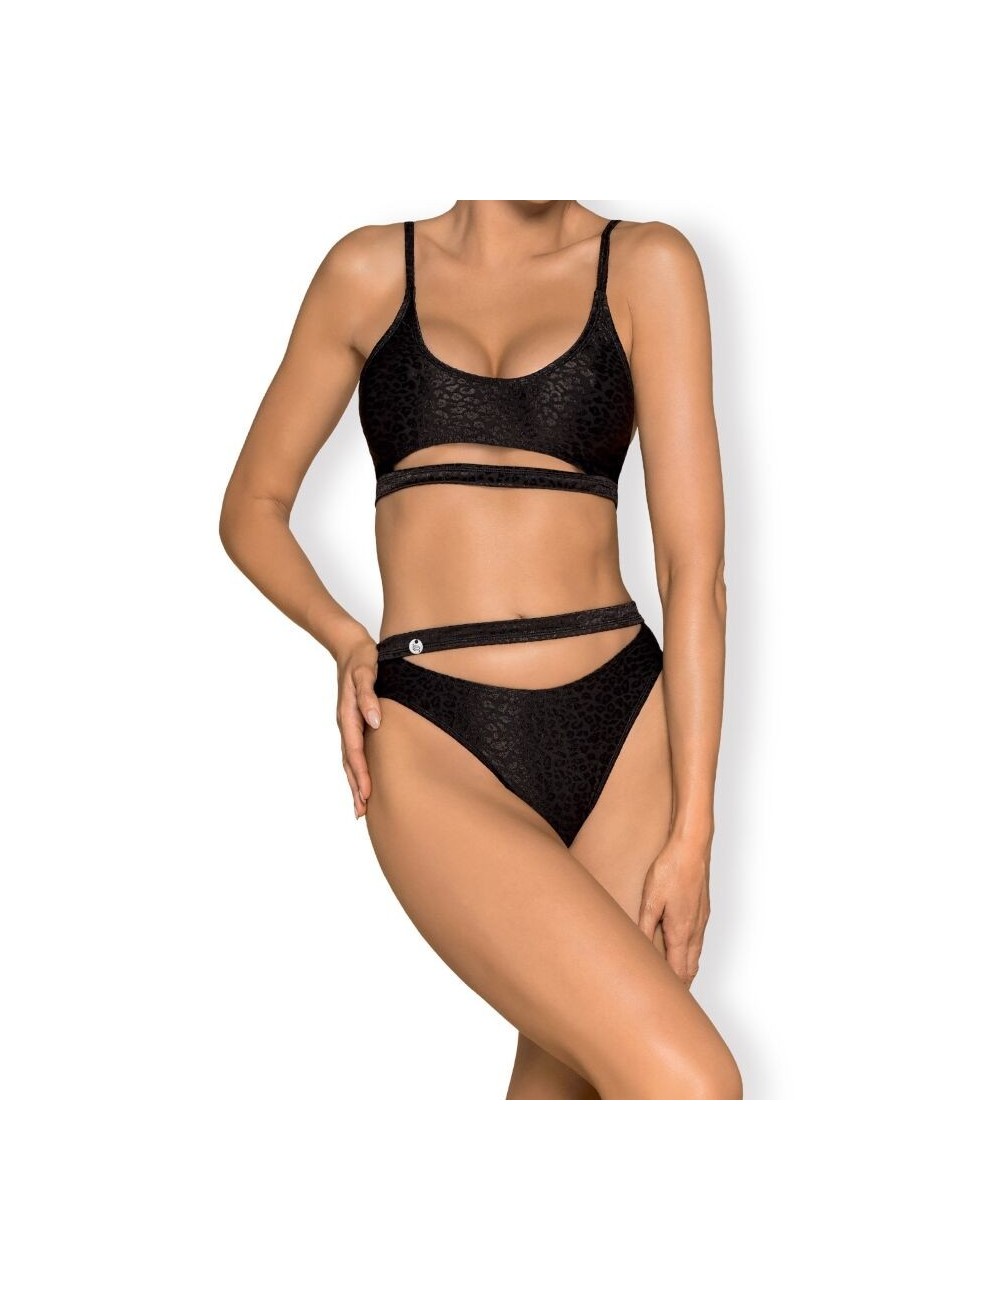 Lingerie - Maillots de bain et tenues de plage - Obsessive - miamelle bikini negro l - Obsessive Summer